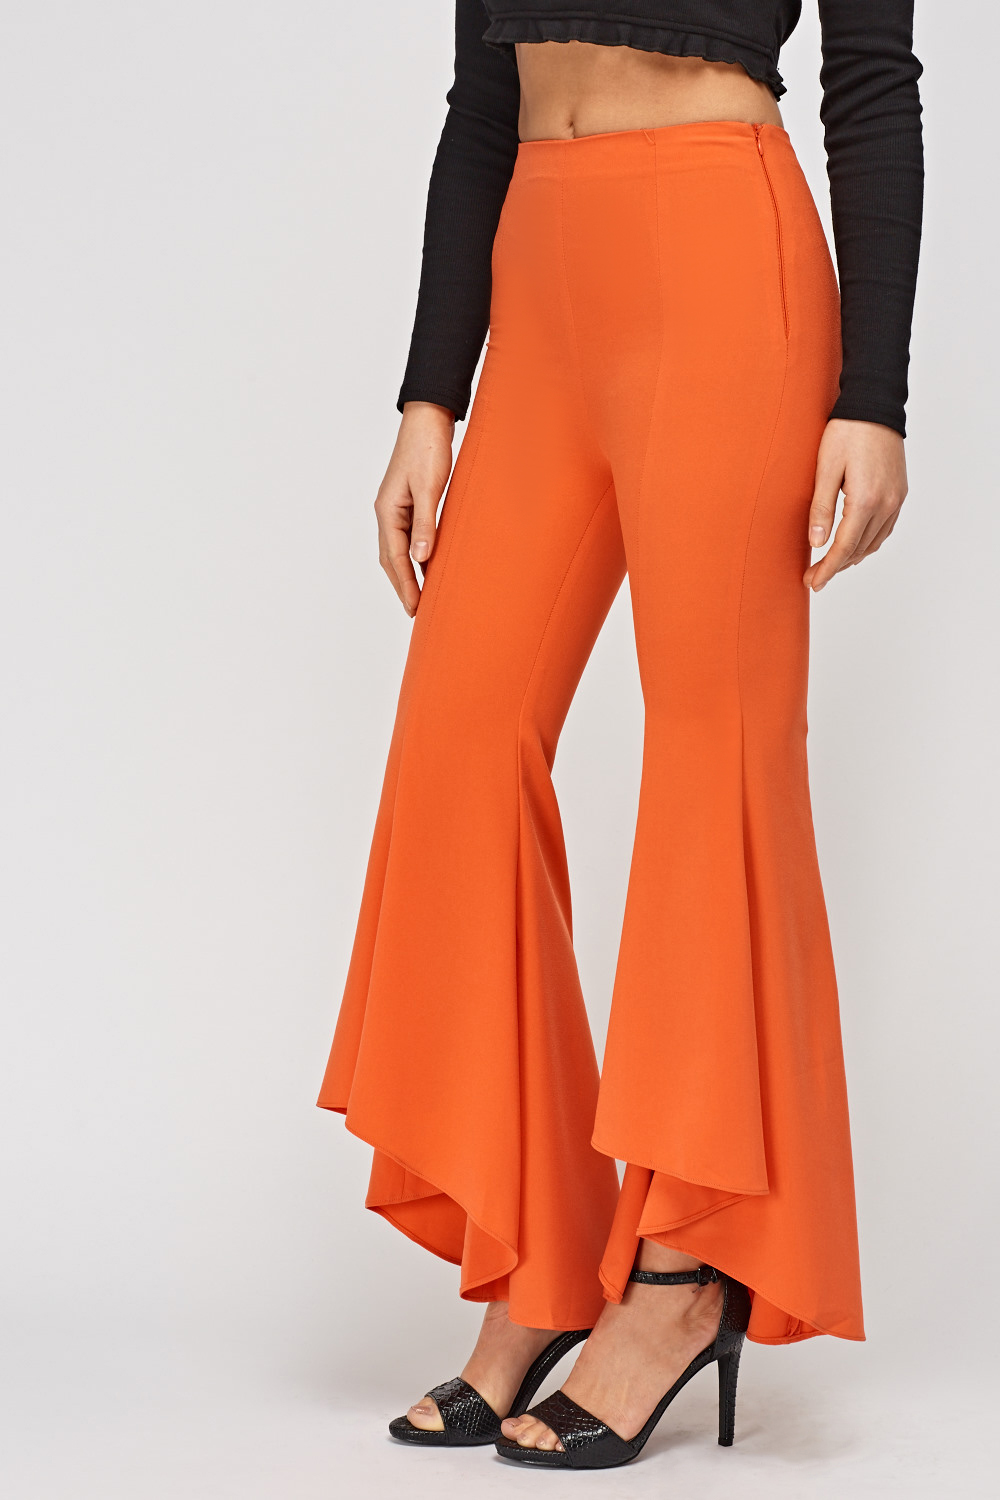 Orange Flare Hem Trousers - Just $7